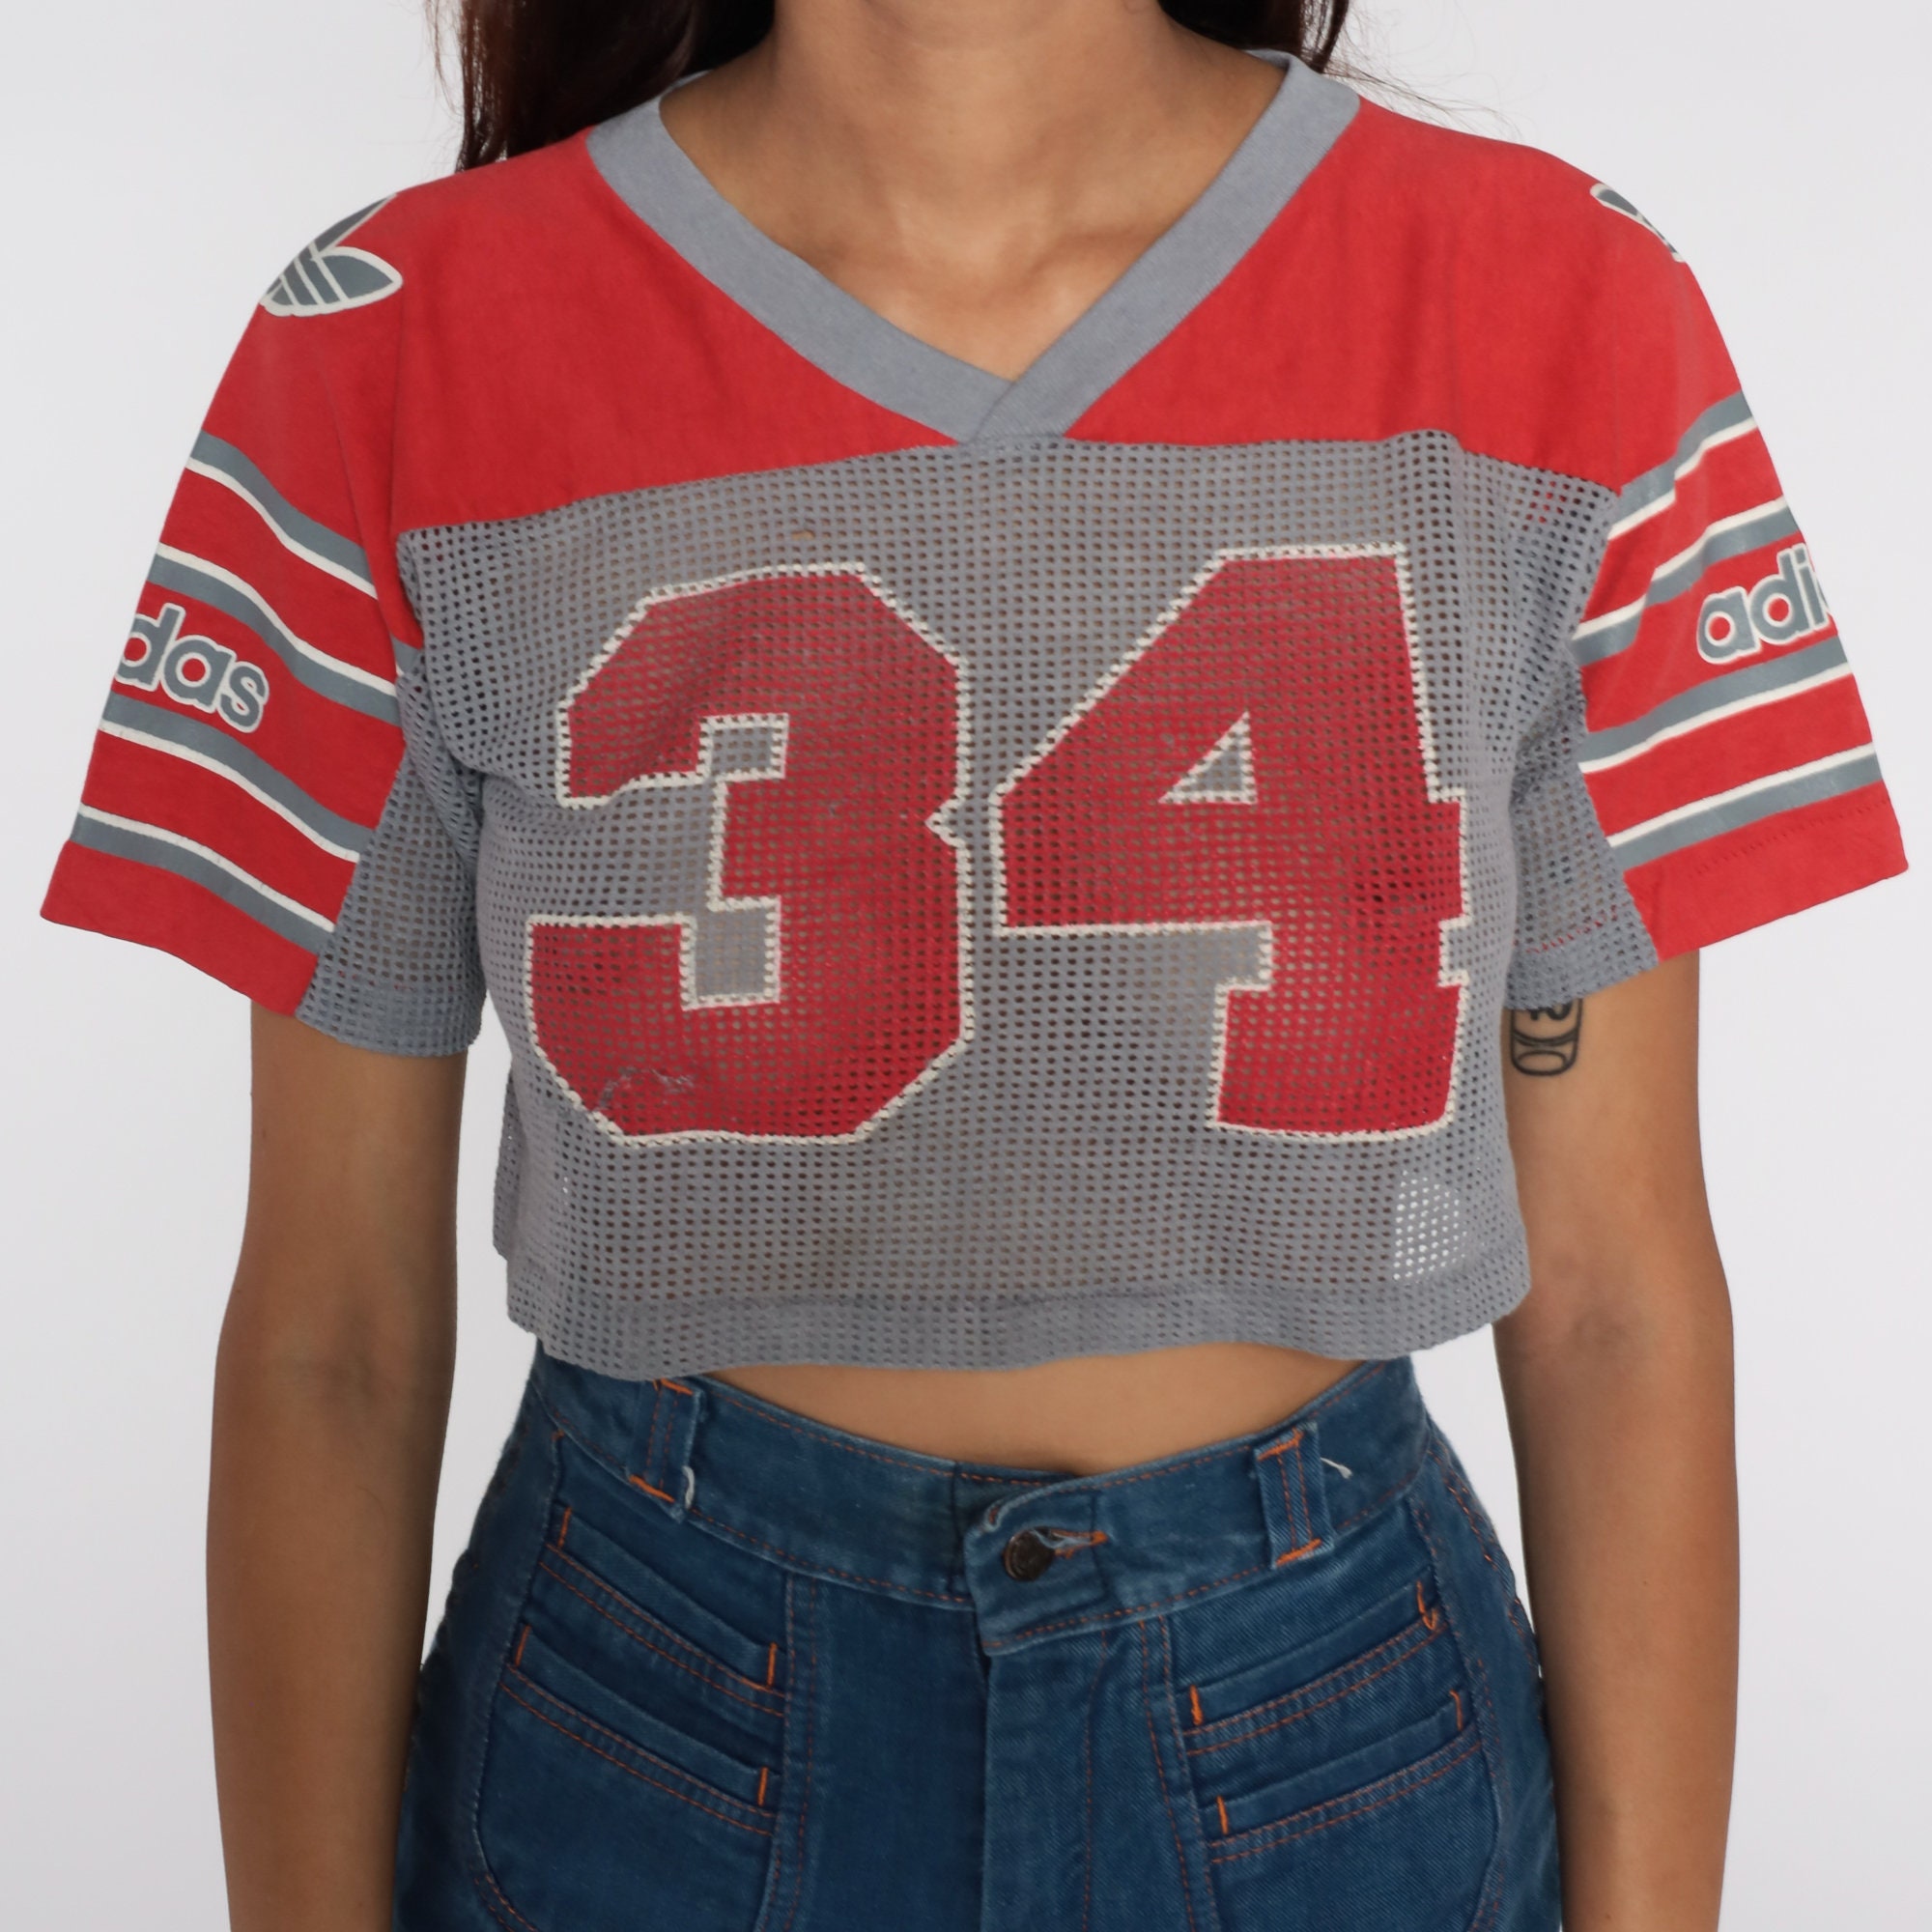 Adidas Football Shirt Mesh Crop Top 80s Tshirt SHEER Athletic